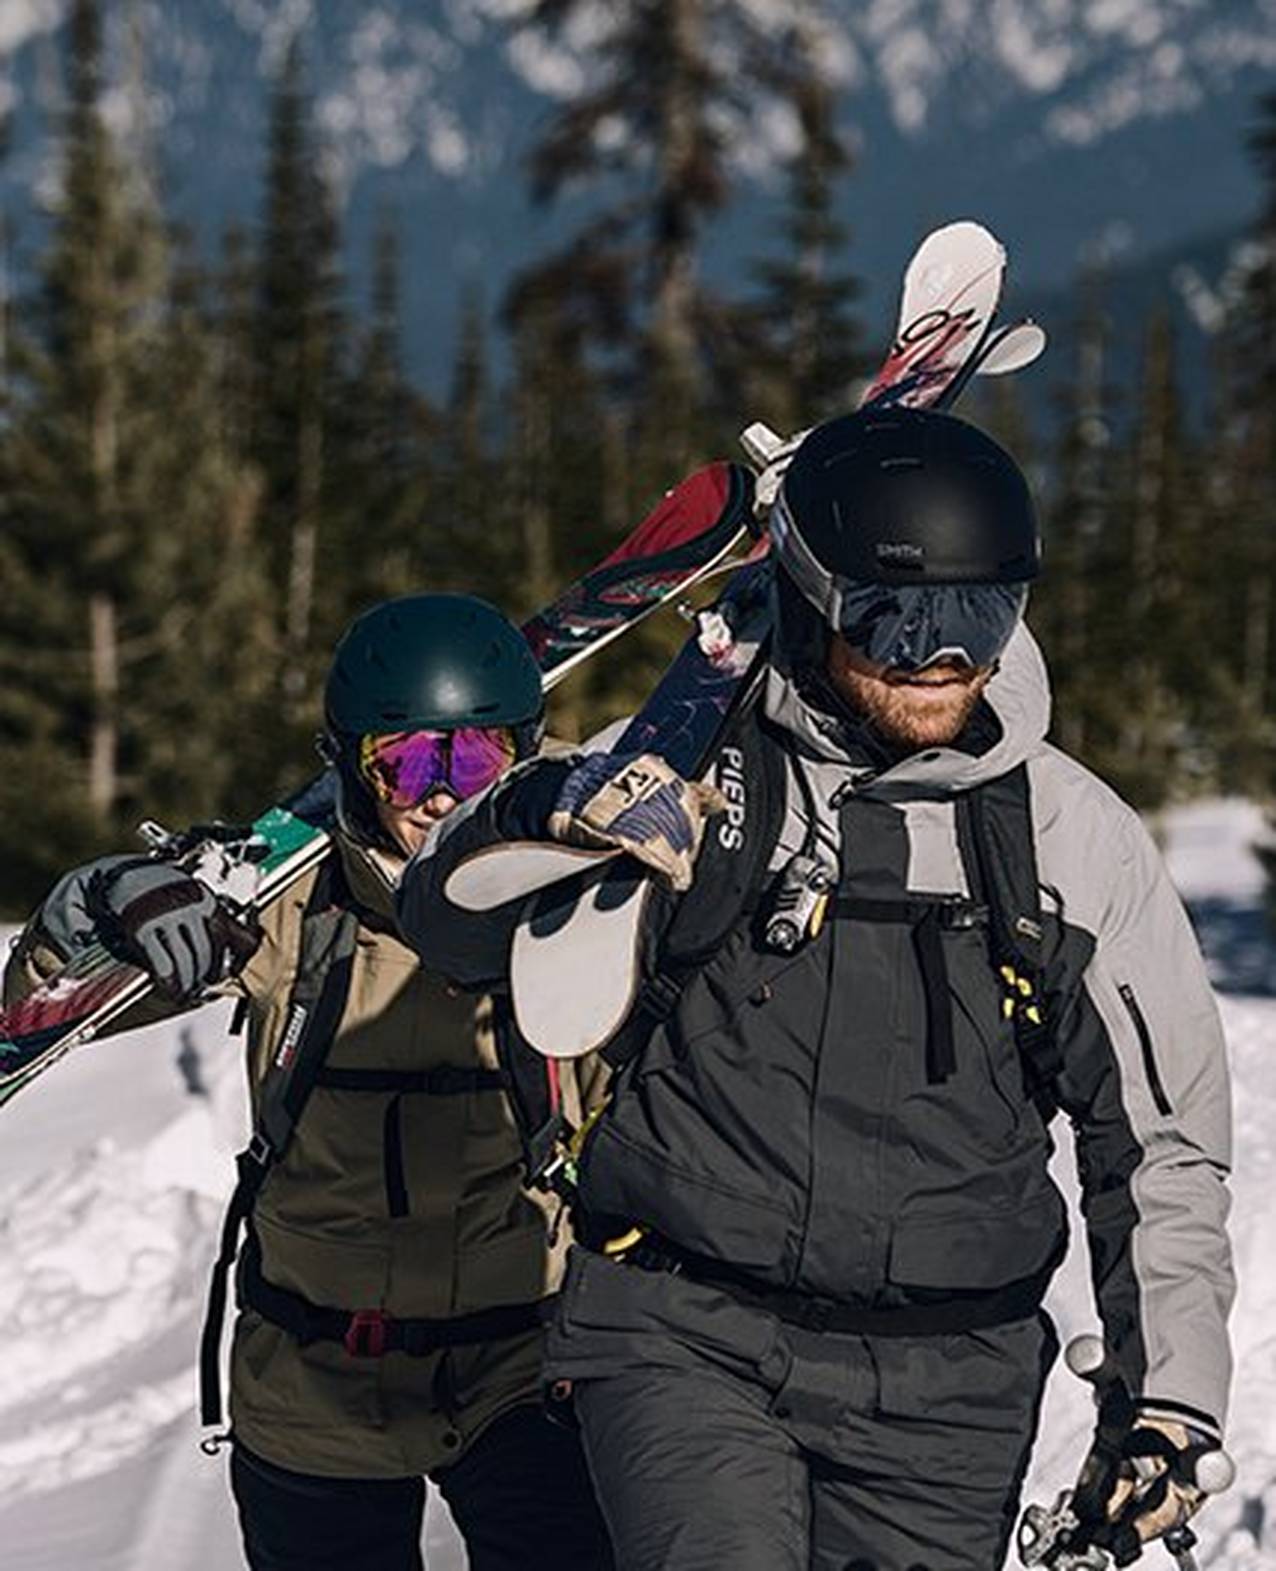 Austin & Justin Donohue in ski gear